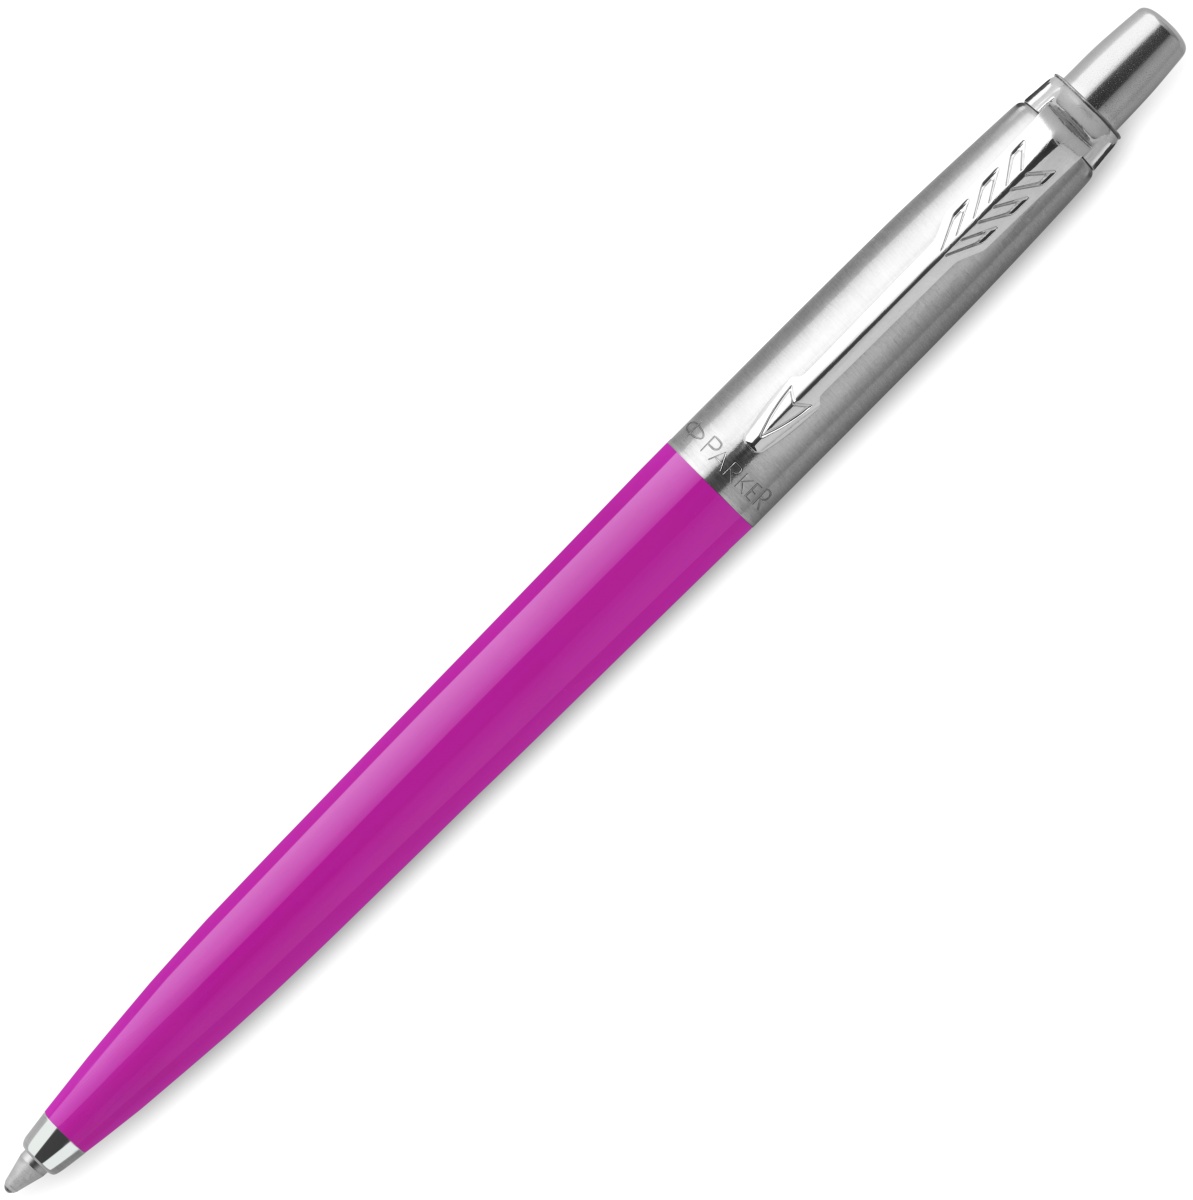  Шариковая ручка Parker Jotter K60 Originals Color Plastic 2019, Pink СT, фото 2